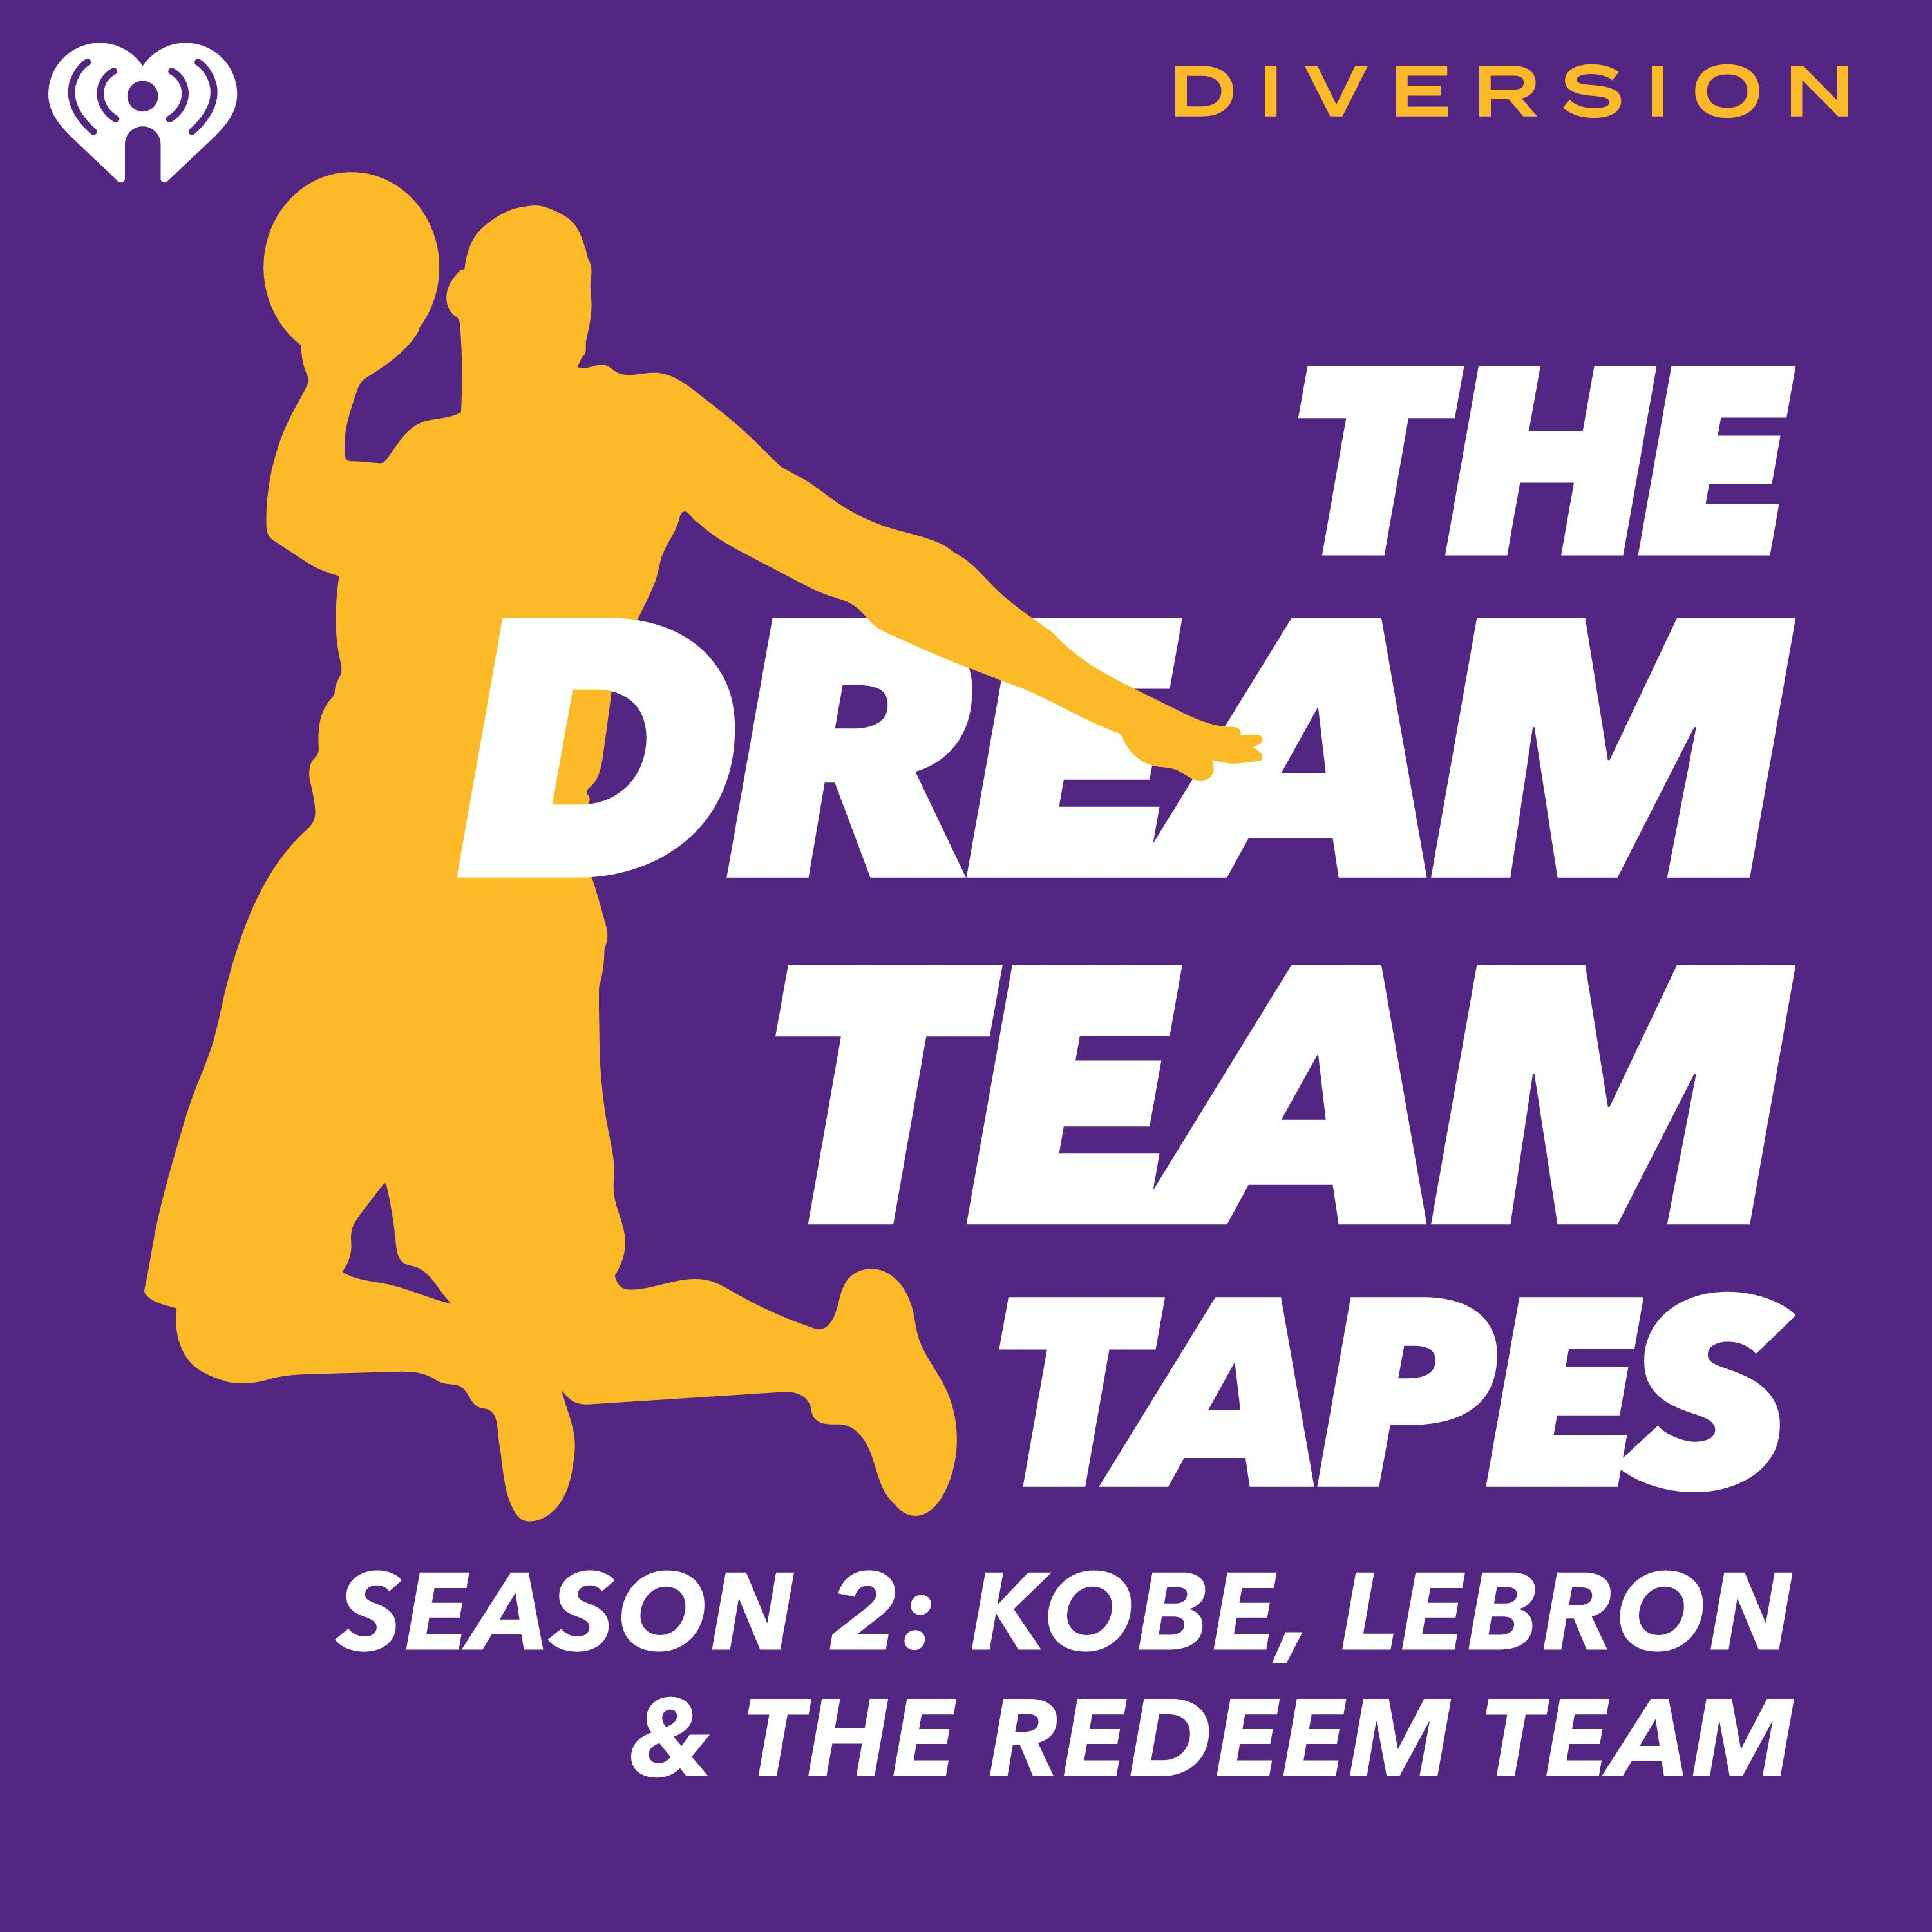 Introducing Season 2: Kobe, LeBron & The Redeem Team